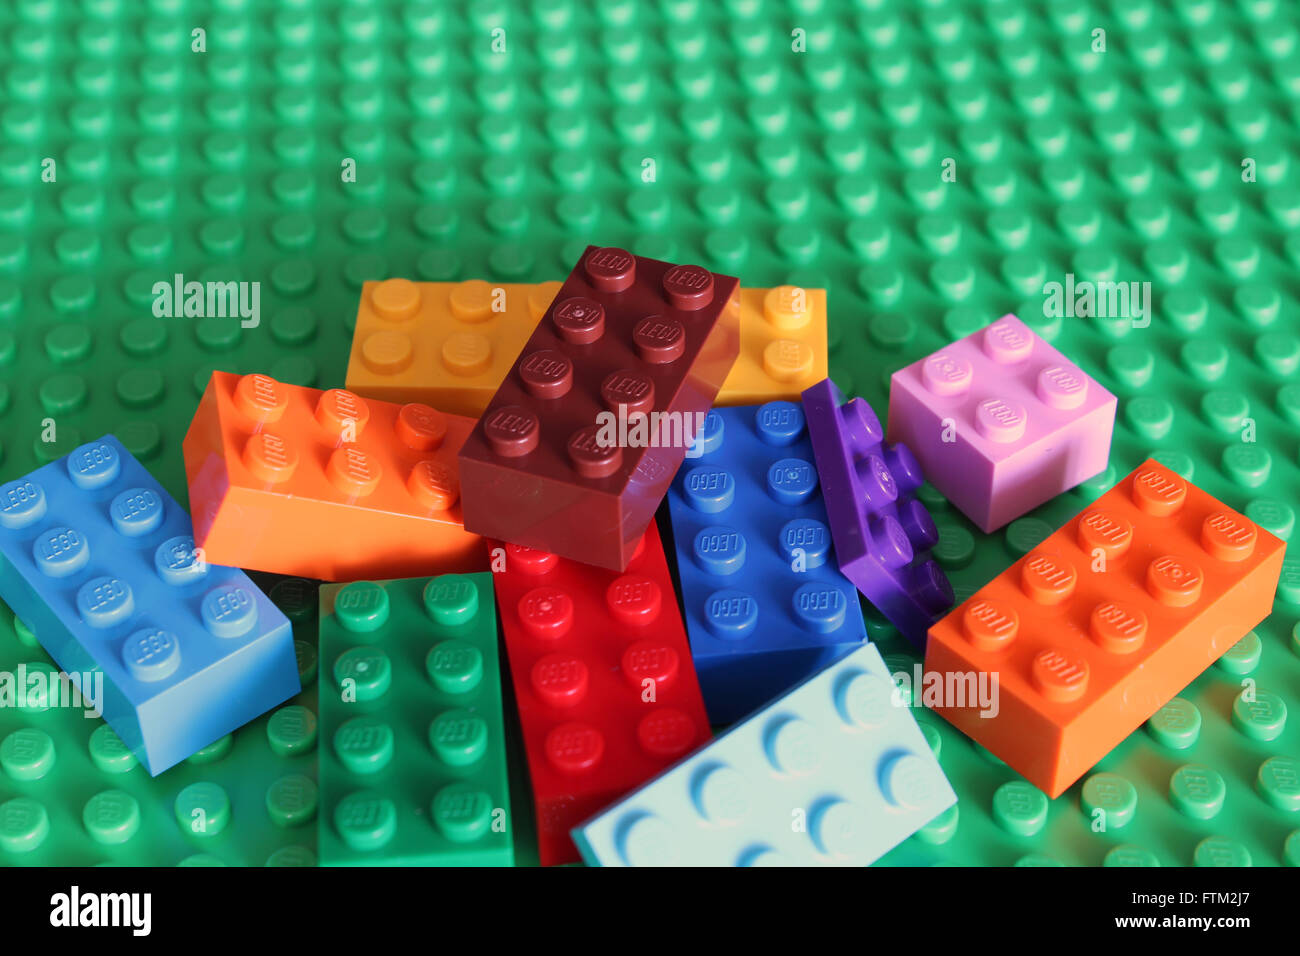 Lego Building Bricks on display Stock Photo